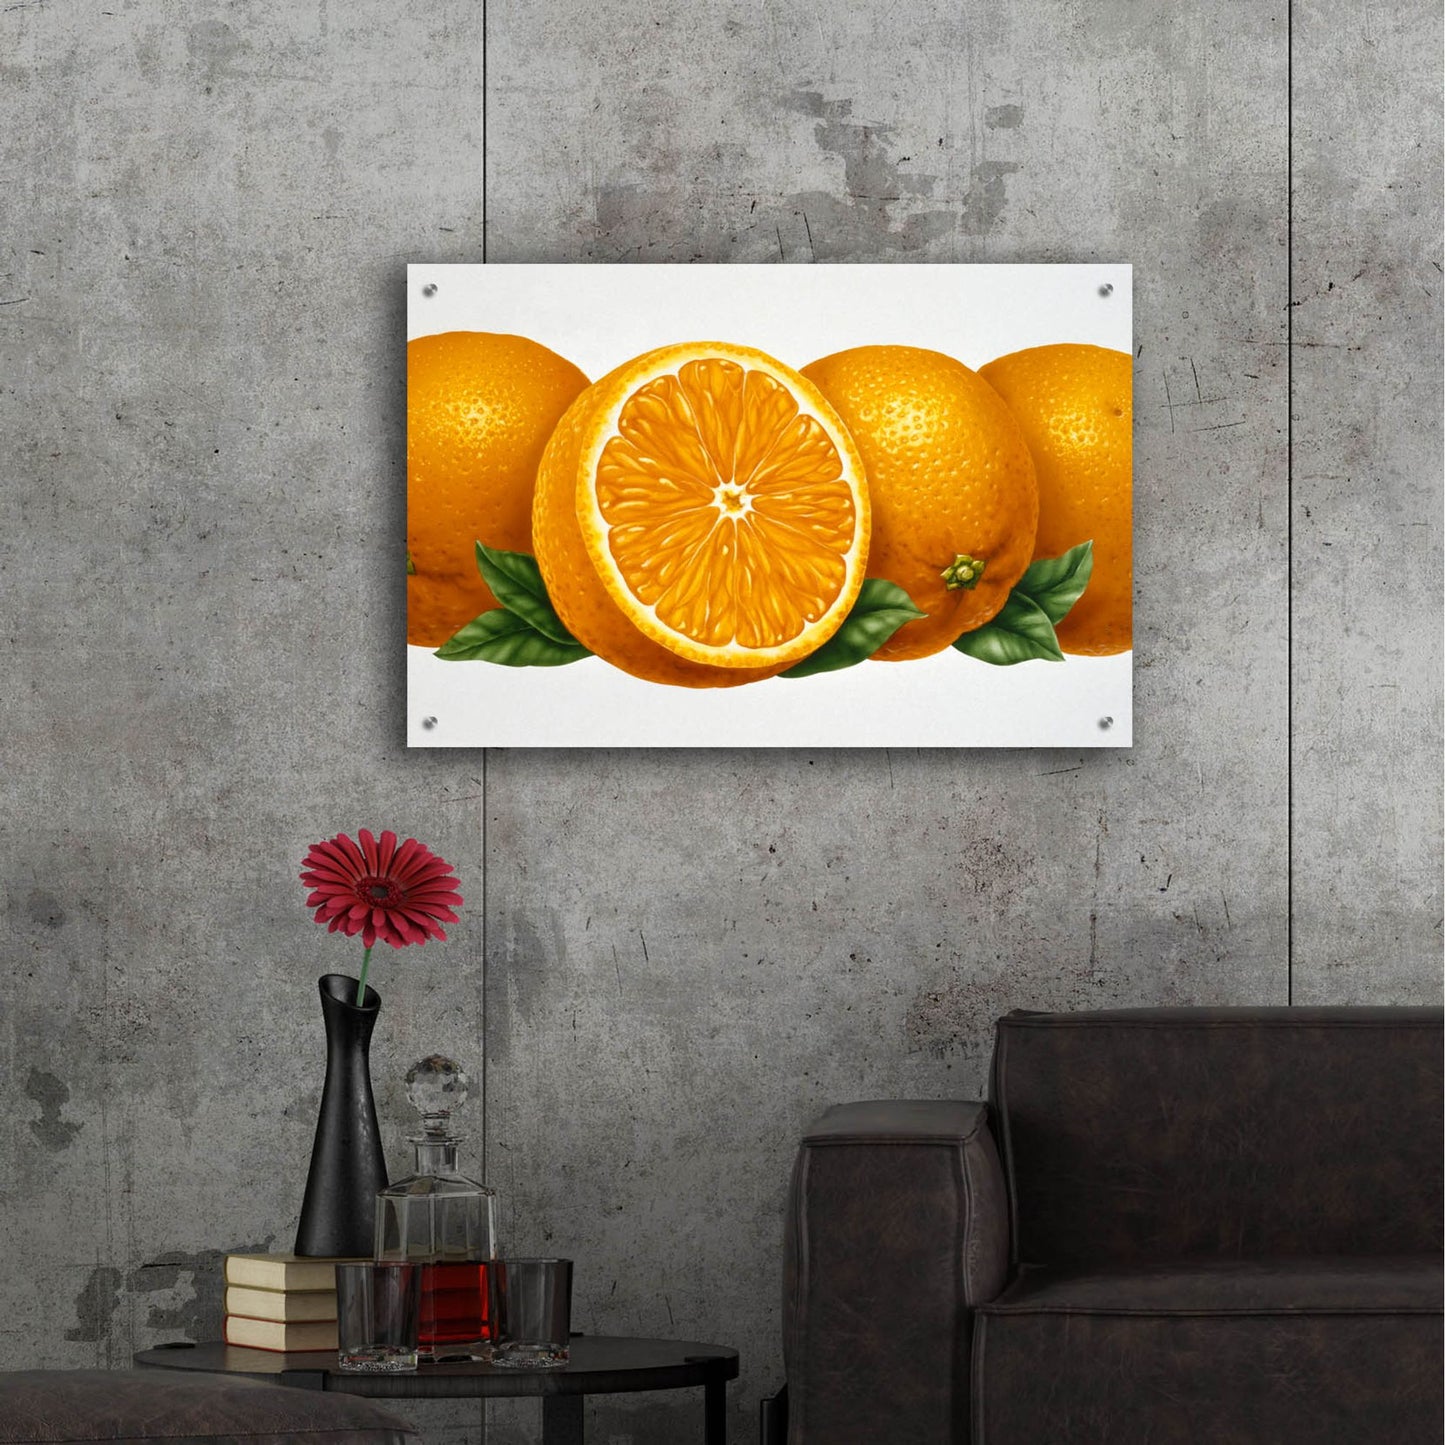 Epic Art 'Oranges' by Harro Maass, Acrylic Glass Wall Art,36x24